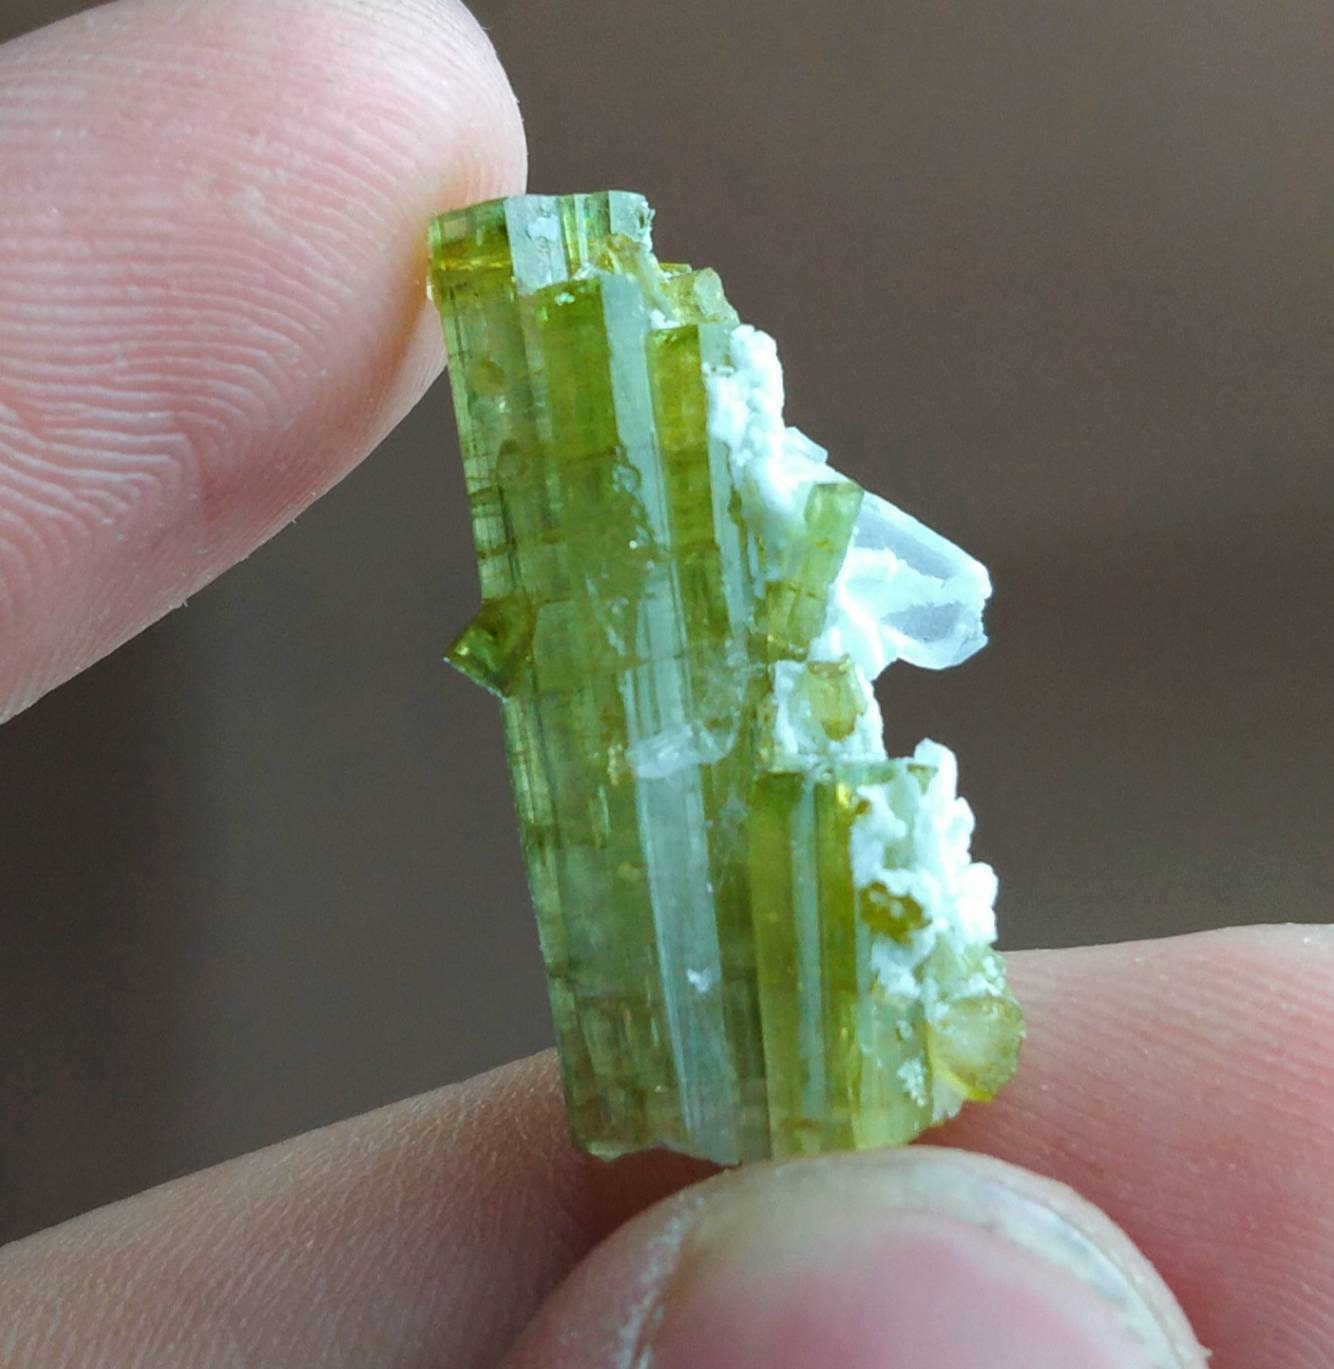 ARSAA GEMS AND MINERALSTerminated natural green tourmaline crystal with quartz on matrix from Skardu GilgitBaltistan Pakistan, weight: 3.3 grams - Premium  from ARSAA GEMS AND MINERALS - Just $50.00! Shop now at ARSAA GEMS AND MINERALS